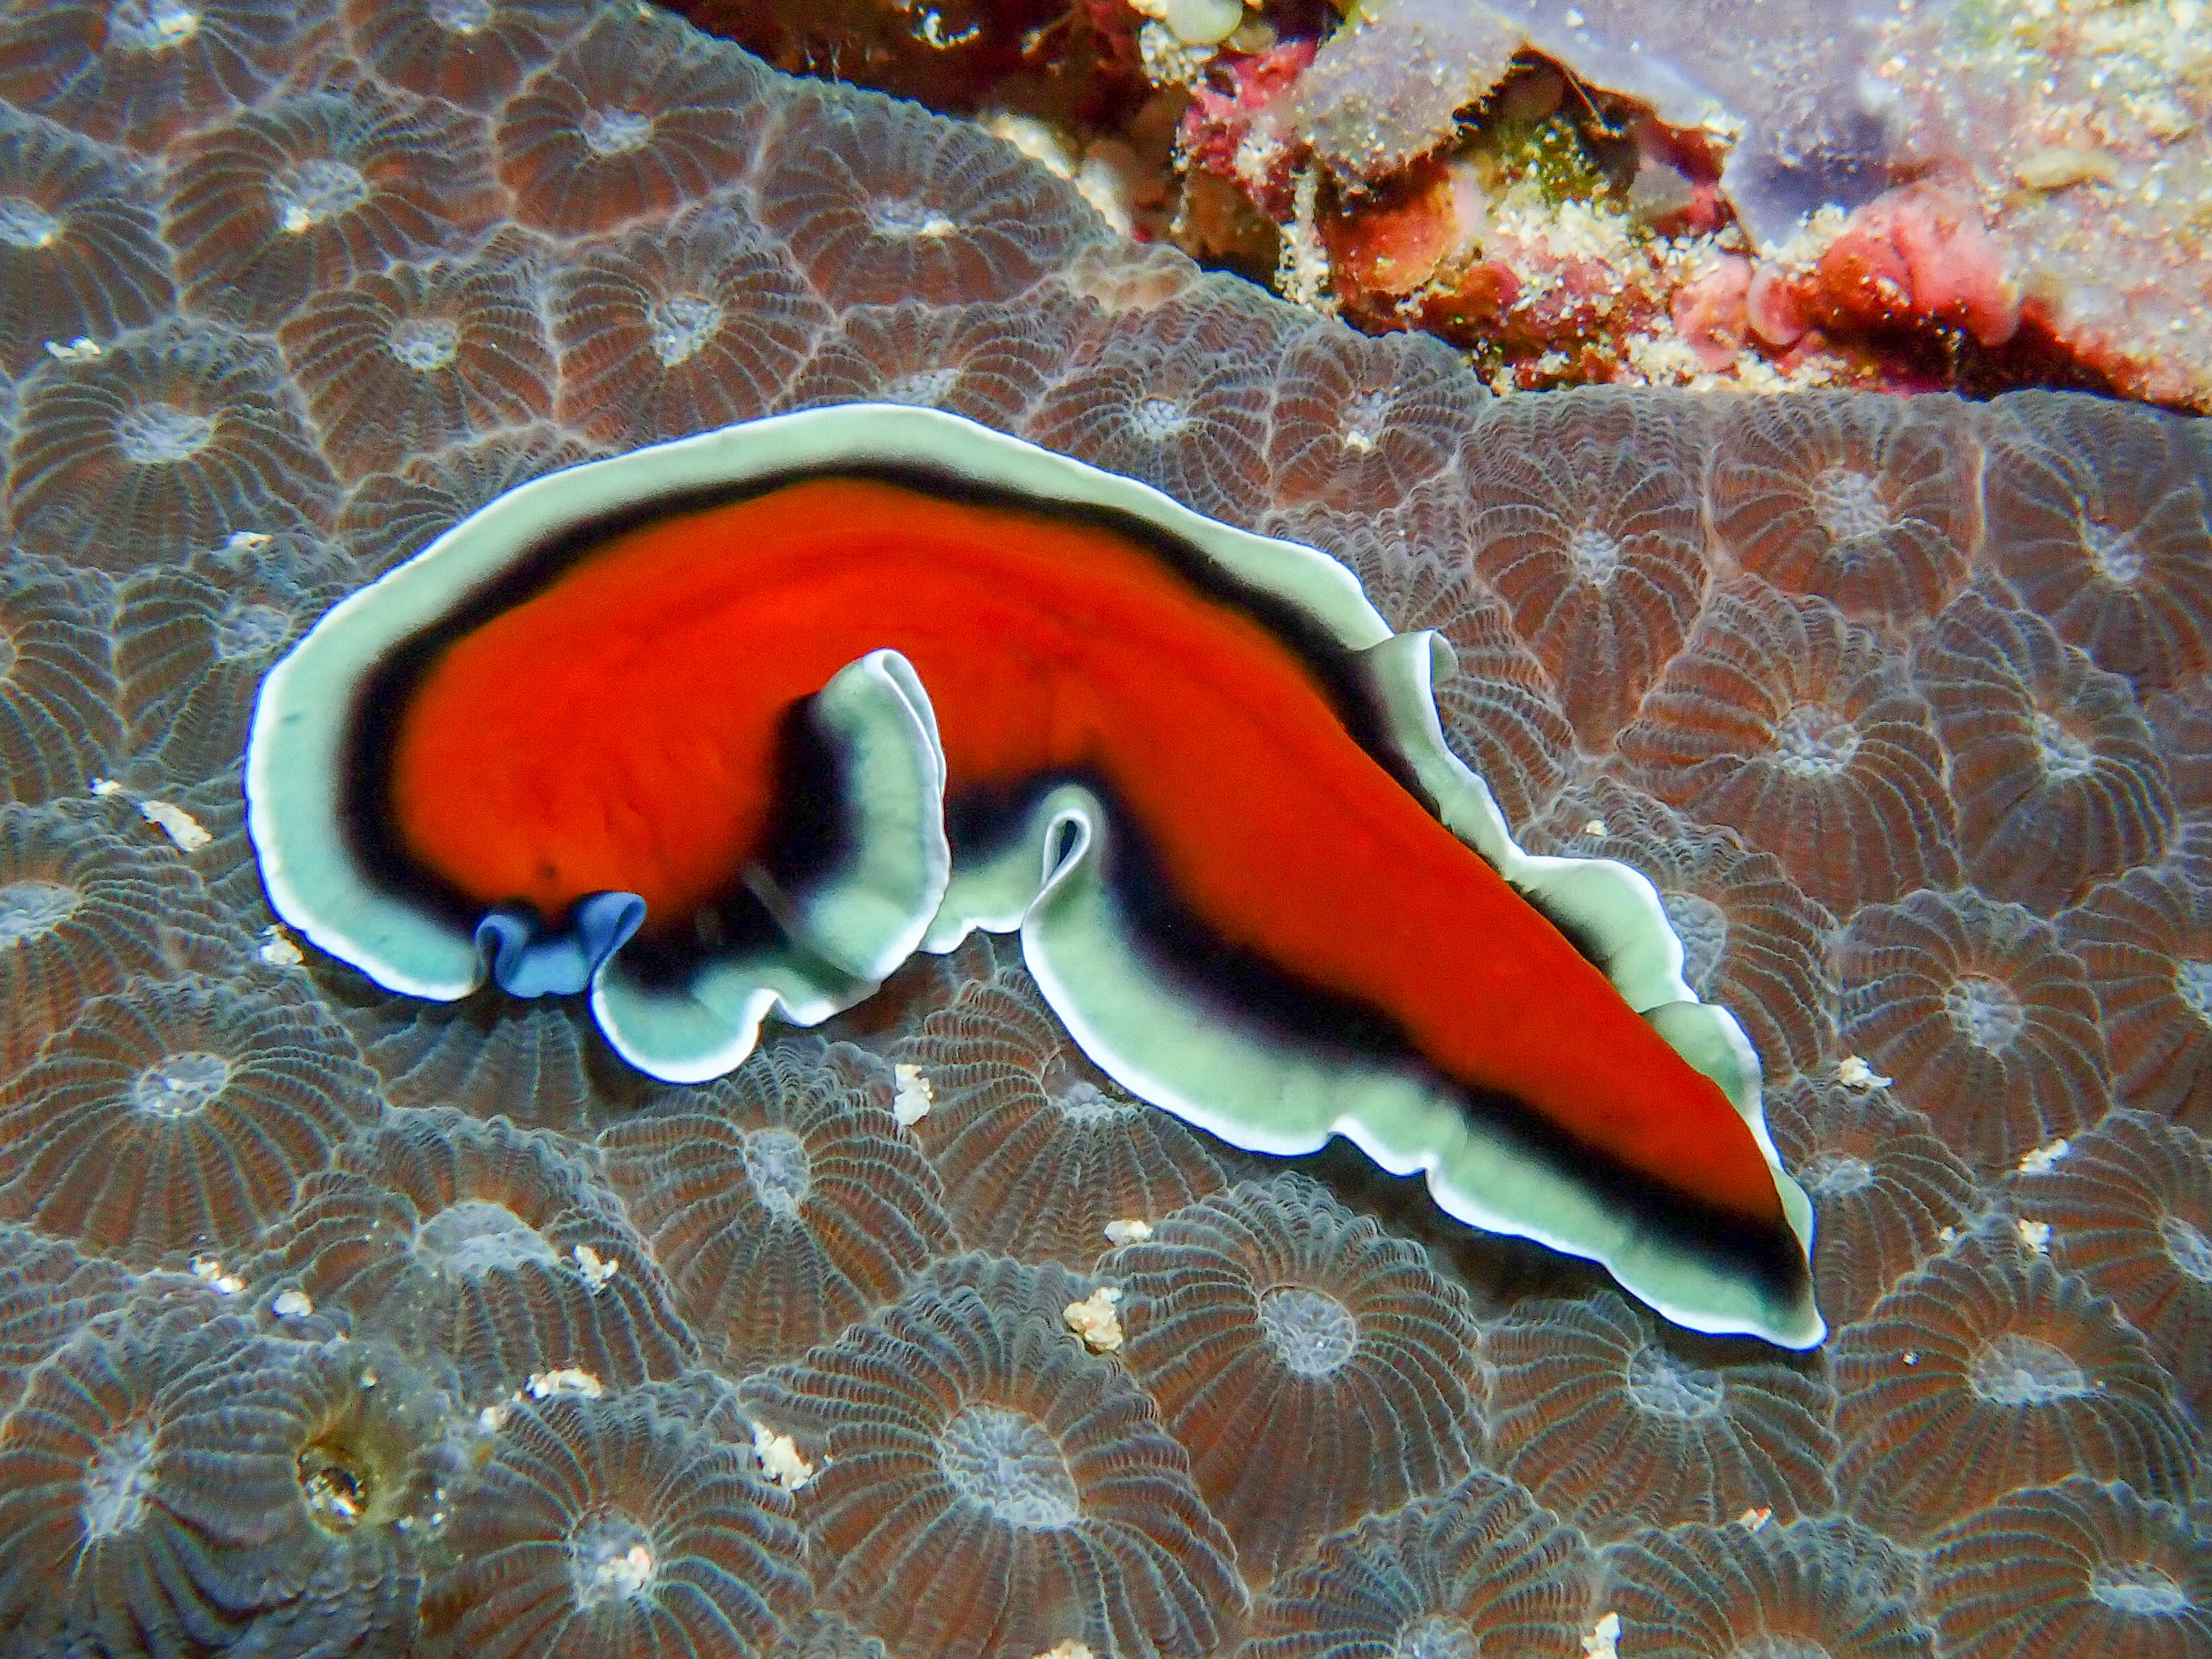 Polyclad flatworm - Pseudoceros sp, Dicky's Reef, Witu Islands